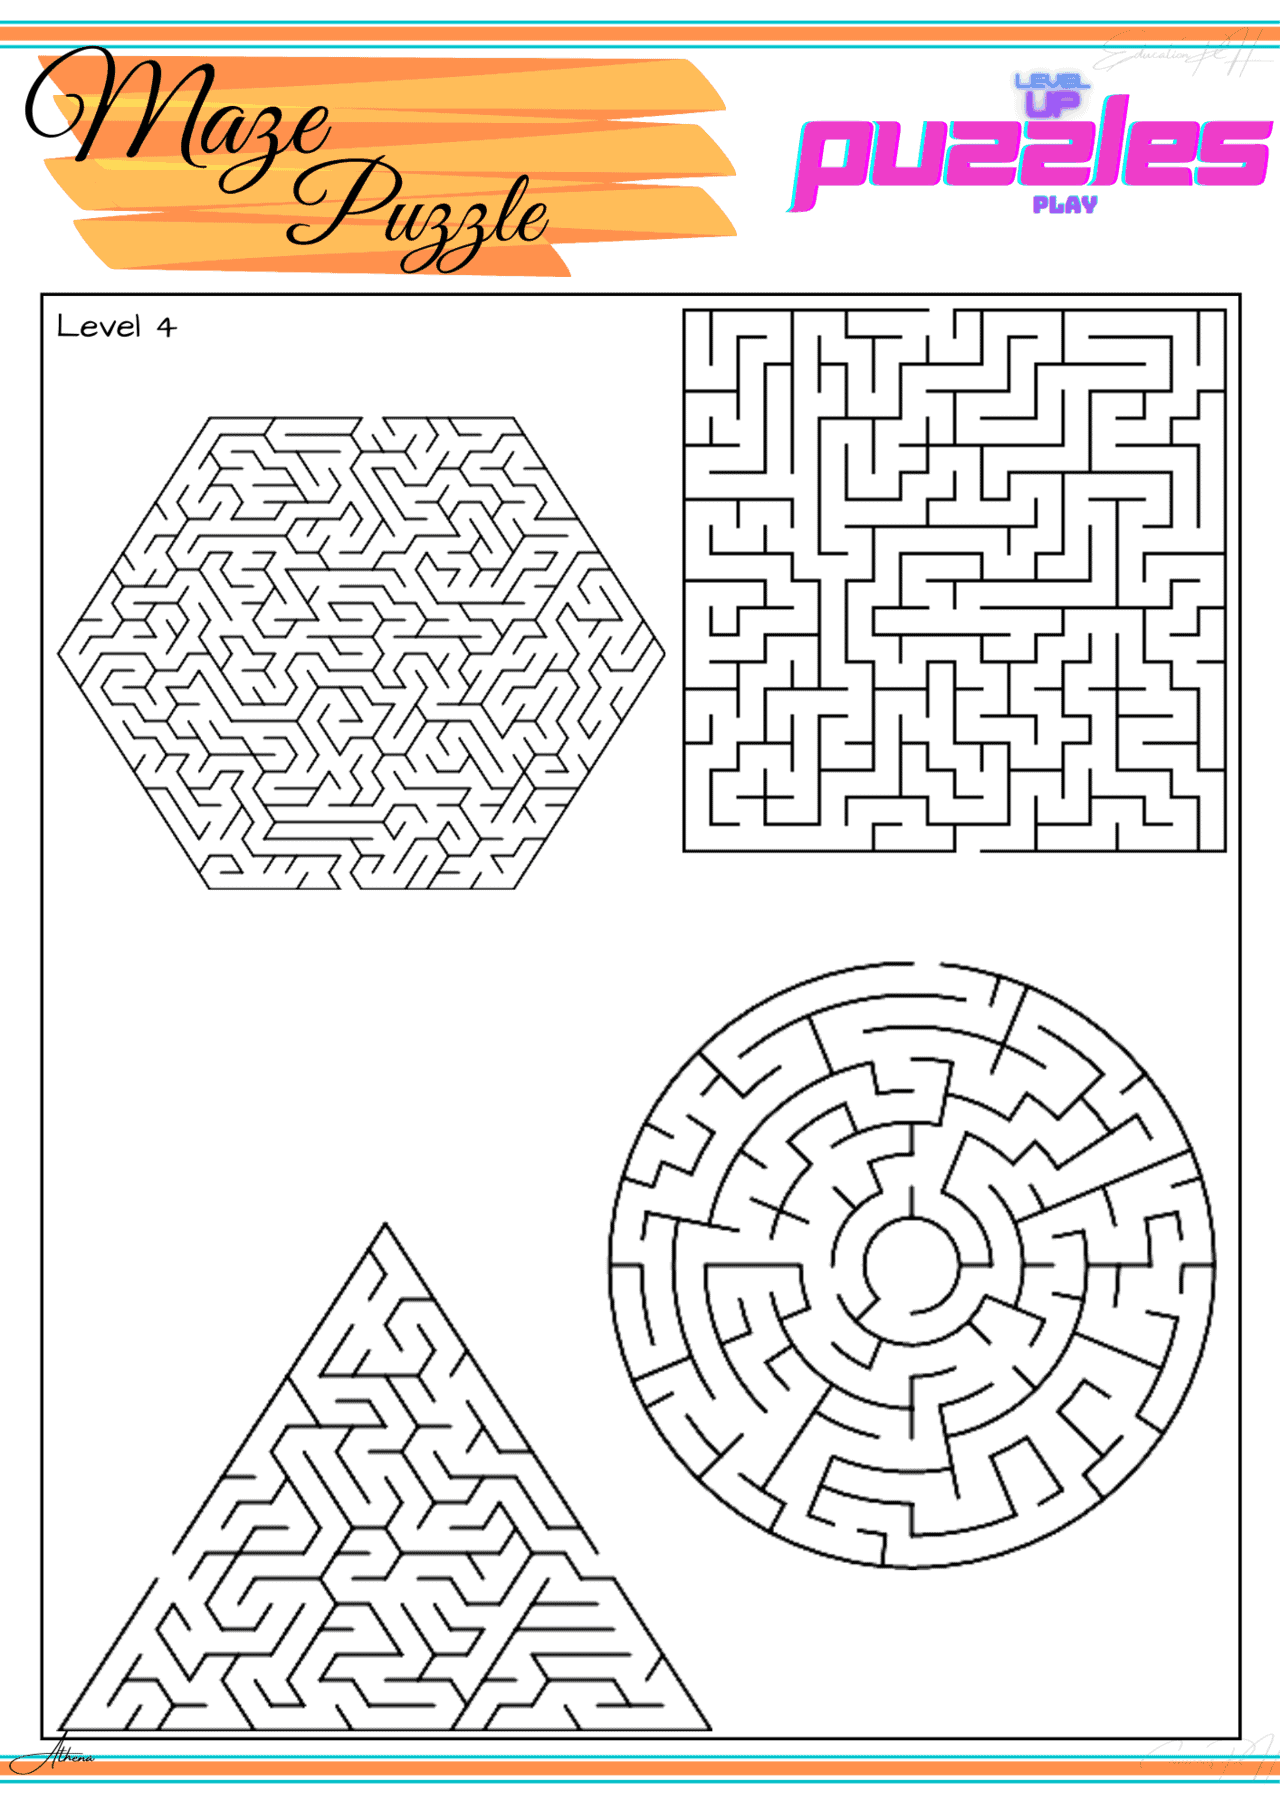 Puzzles | Maze ( Easy to Challenge)